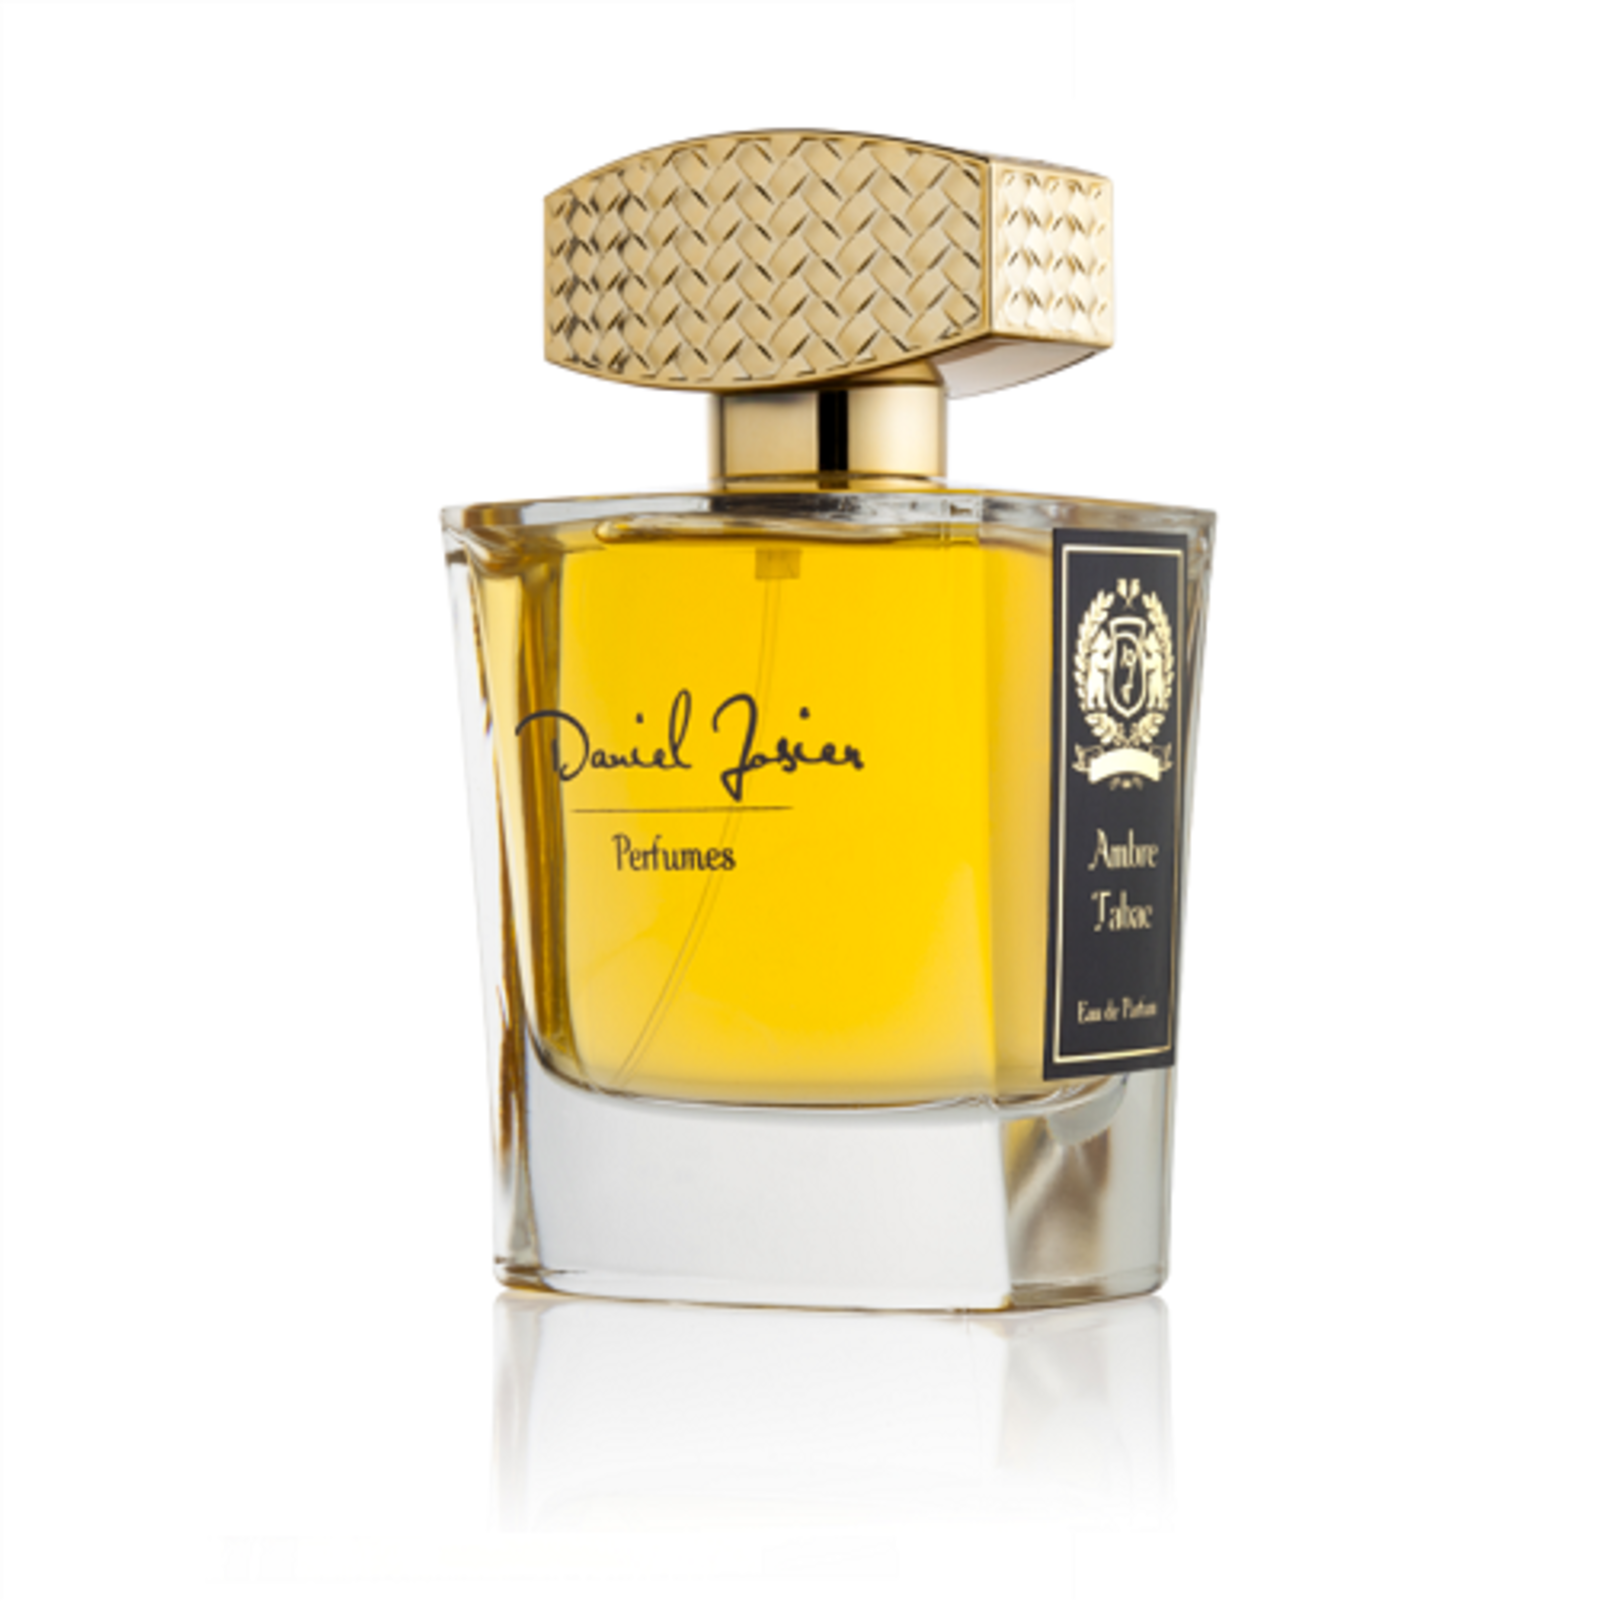 Perfume de Daniel Josier.